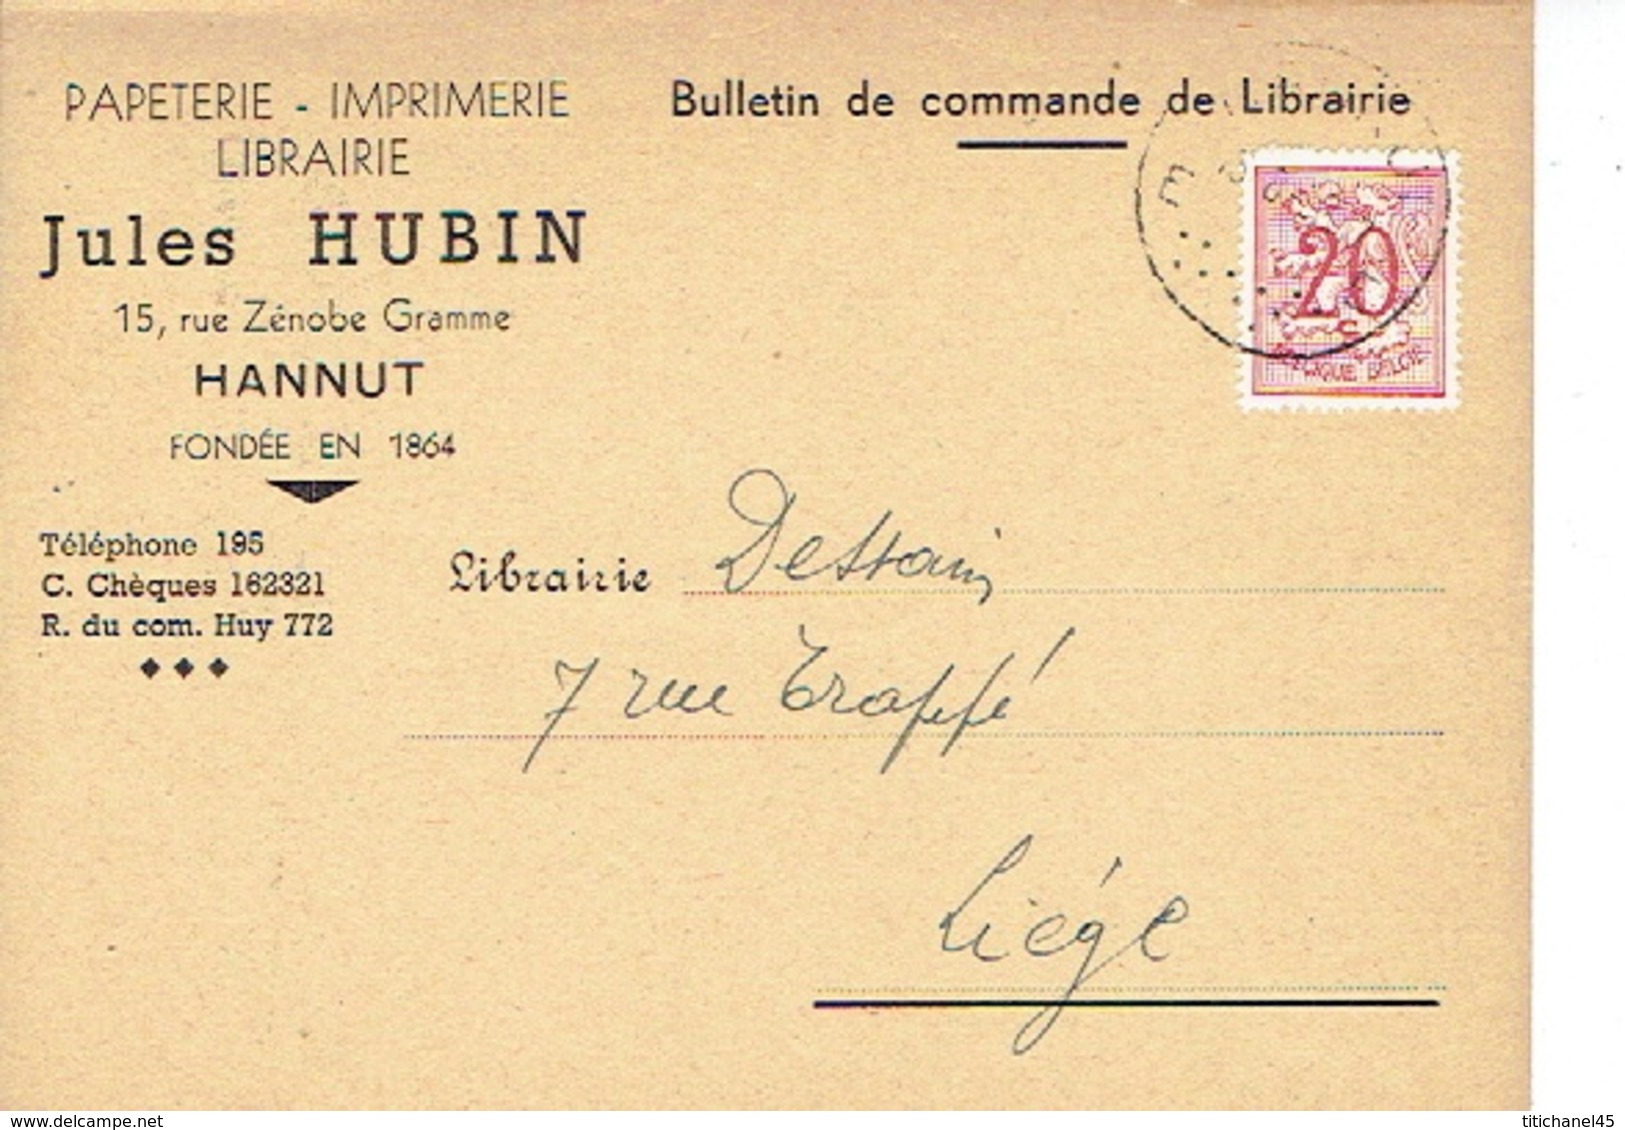 CP Publicitaire HANNUT 1952 - Jules HUBIN - Papeterie - Imprimerie - Librairie - Hannut